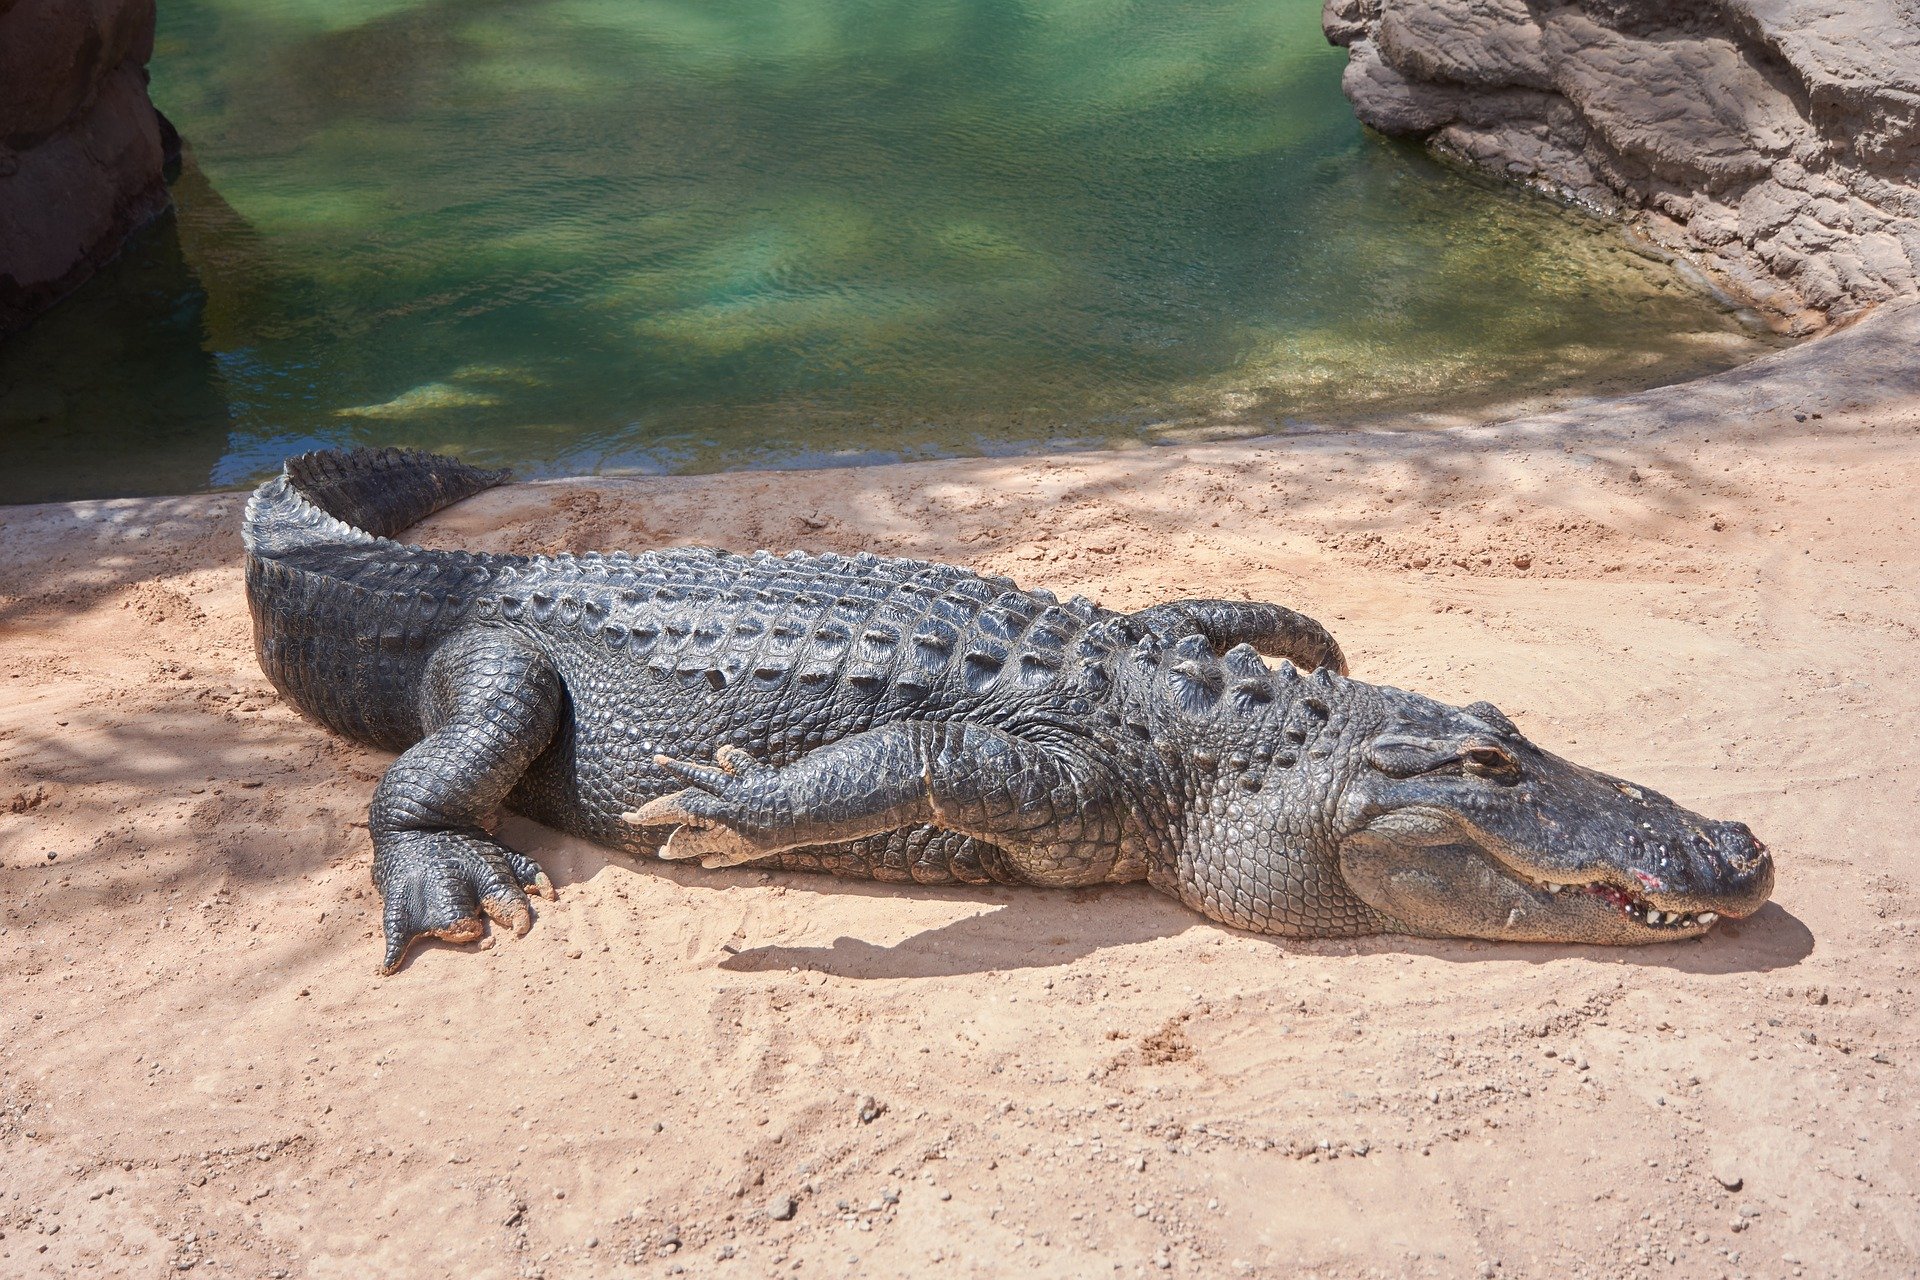 Alligator on a sand bank. | Source: Pixabay